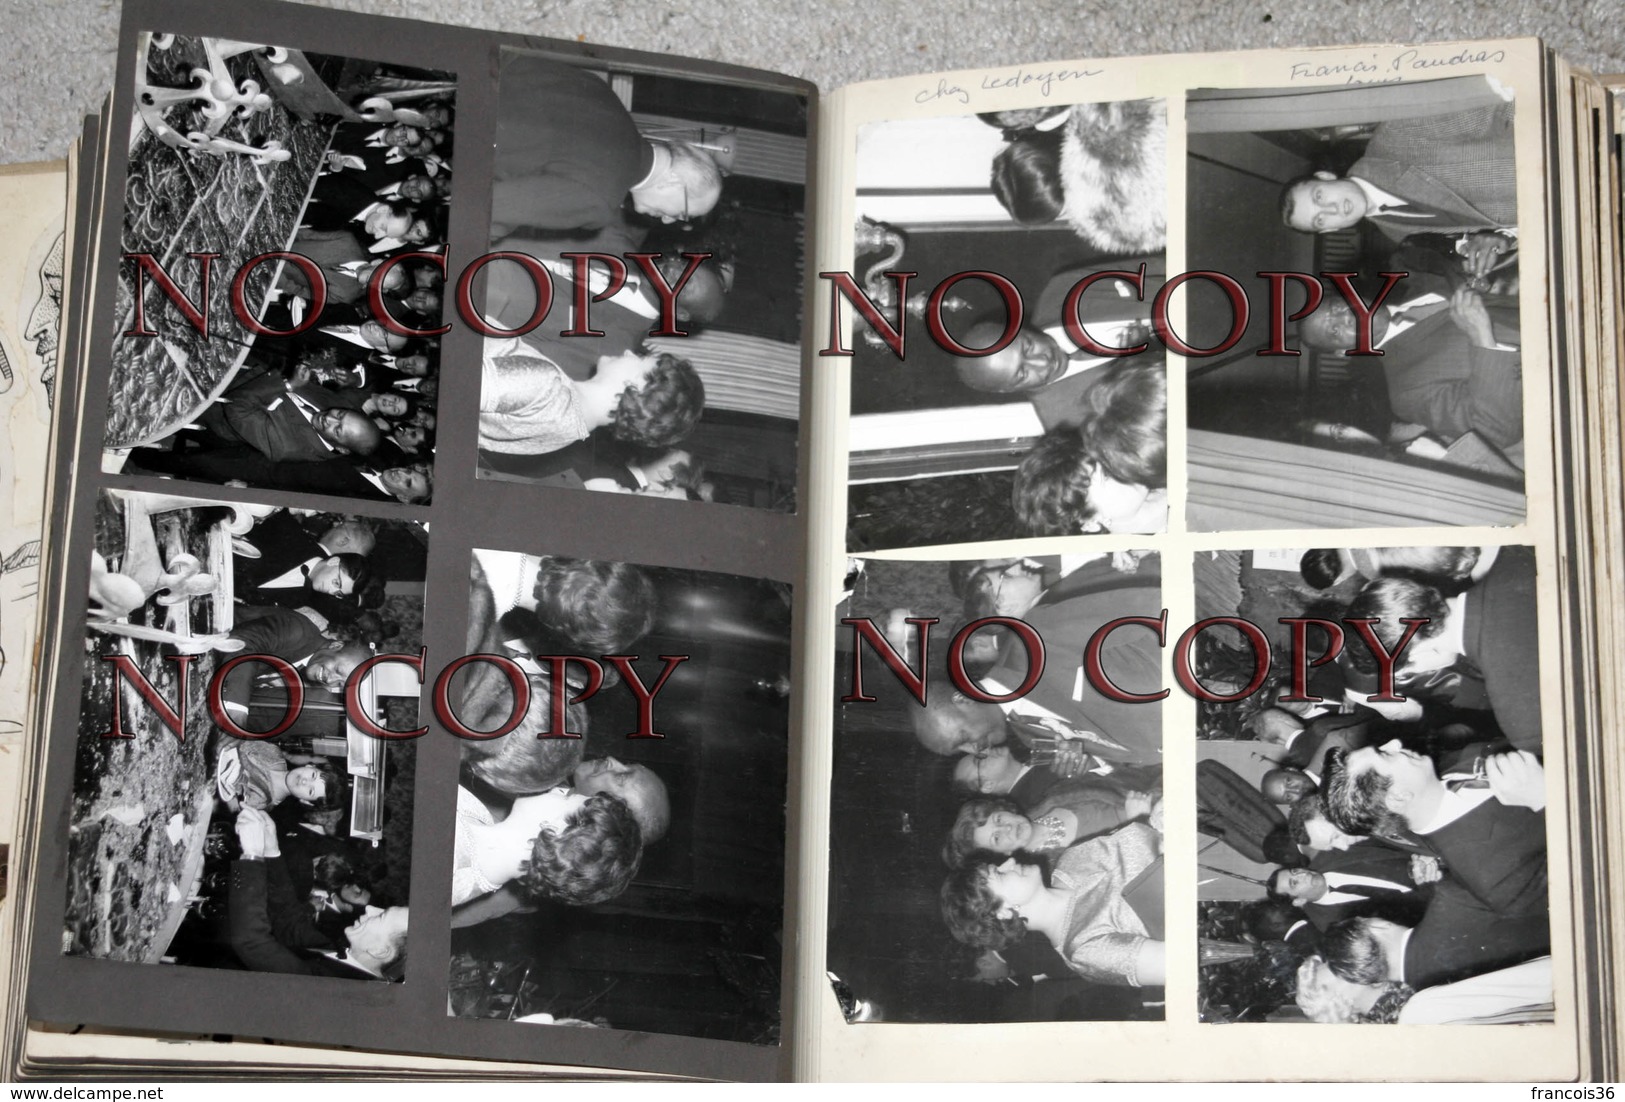 ALBUM de 377 photographies Collection privée de Bill Coleman avec Louis Armstrong Ray Charles - Jazz Swing Blues 50s 60s